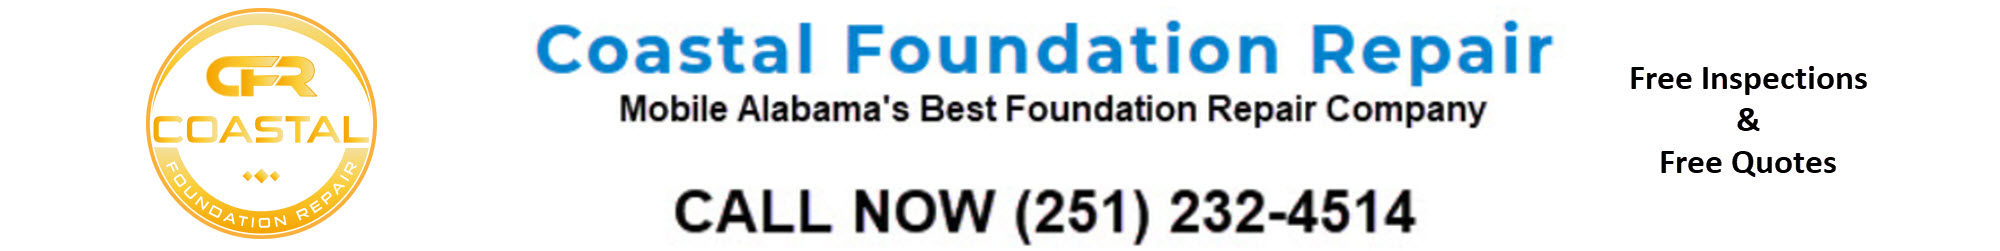 Coastal Foundation Repair - Mobile Alabama's Best Foundation Repair Company